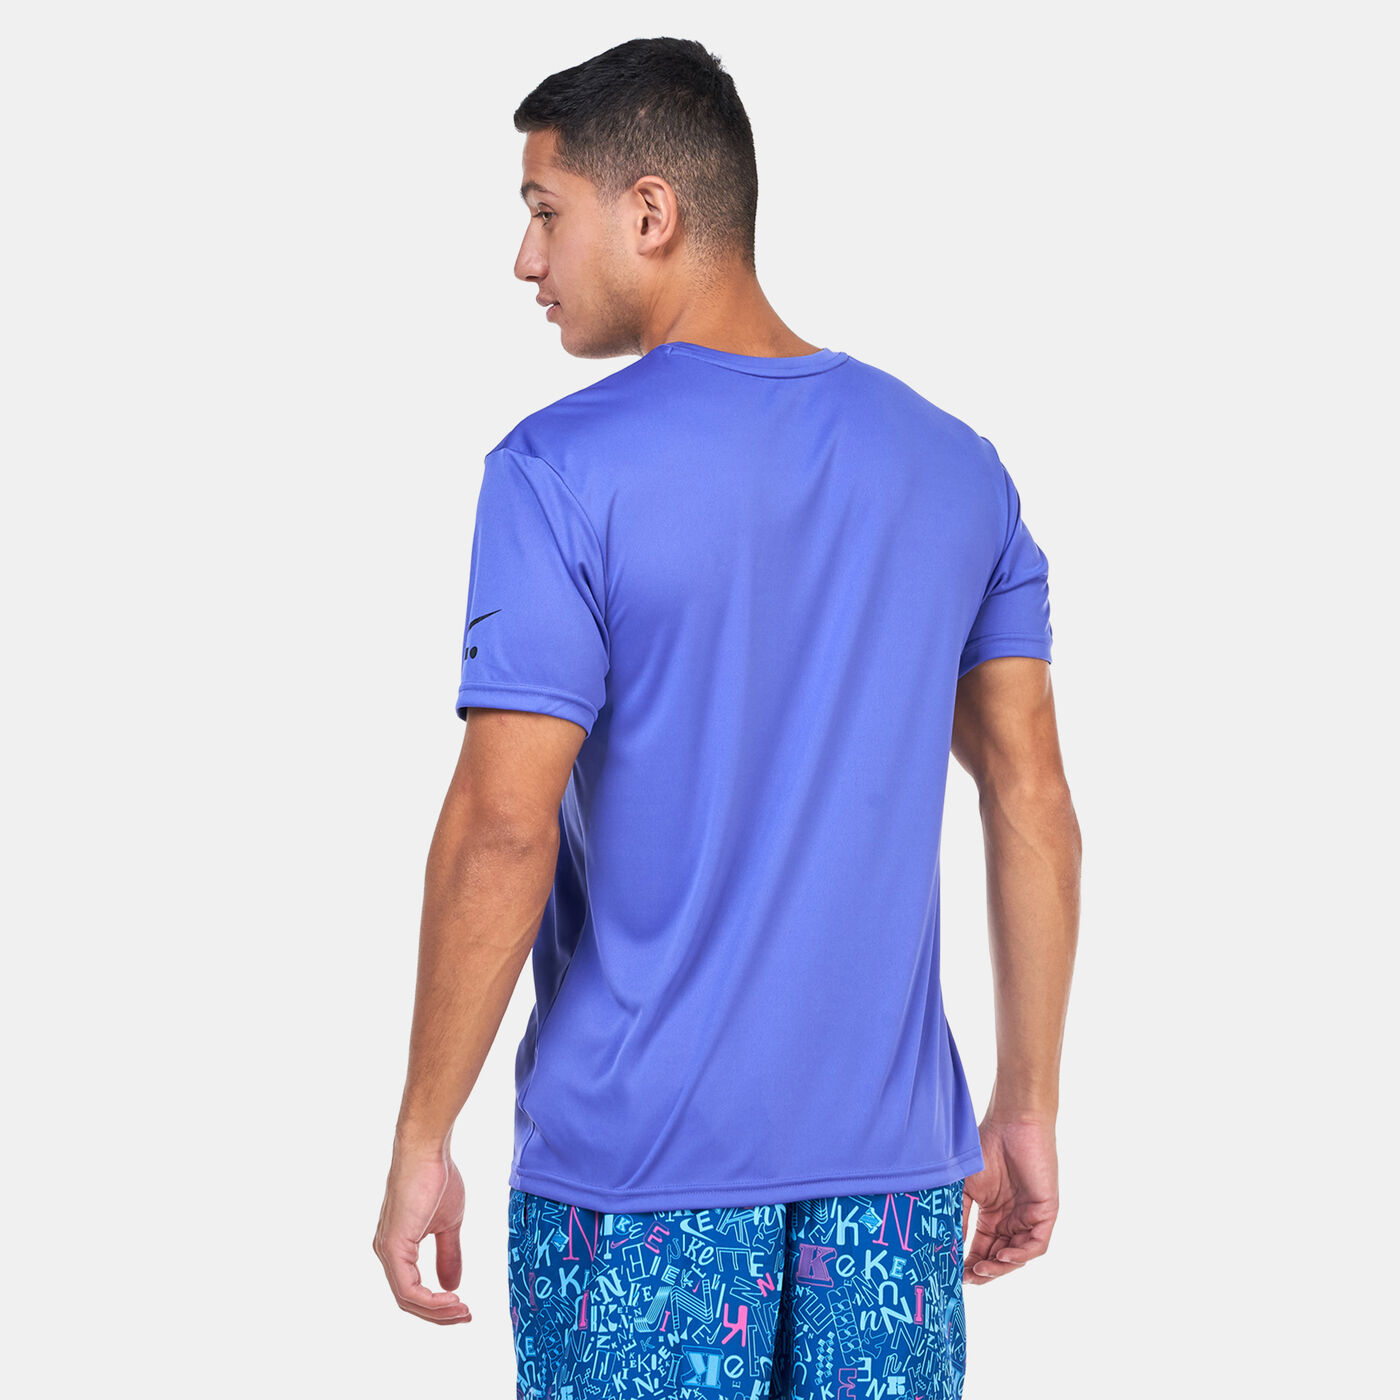 Men's Printed Hydroguard Swimming T-Shirt